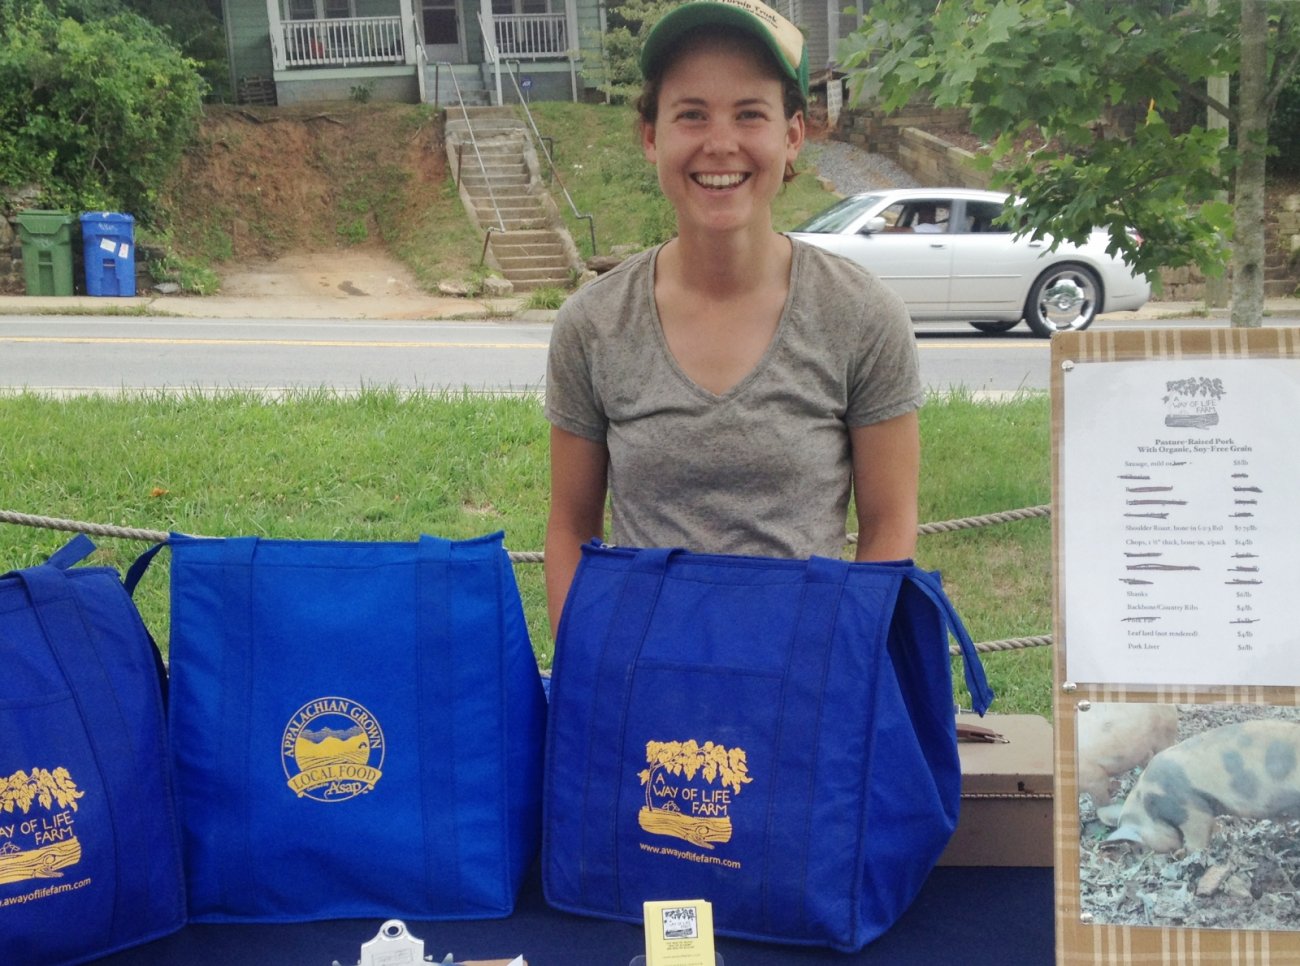 Appalachian Grown cost share branding on A Way of Life Farm's CSA bags